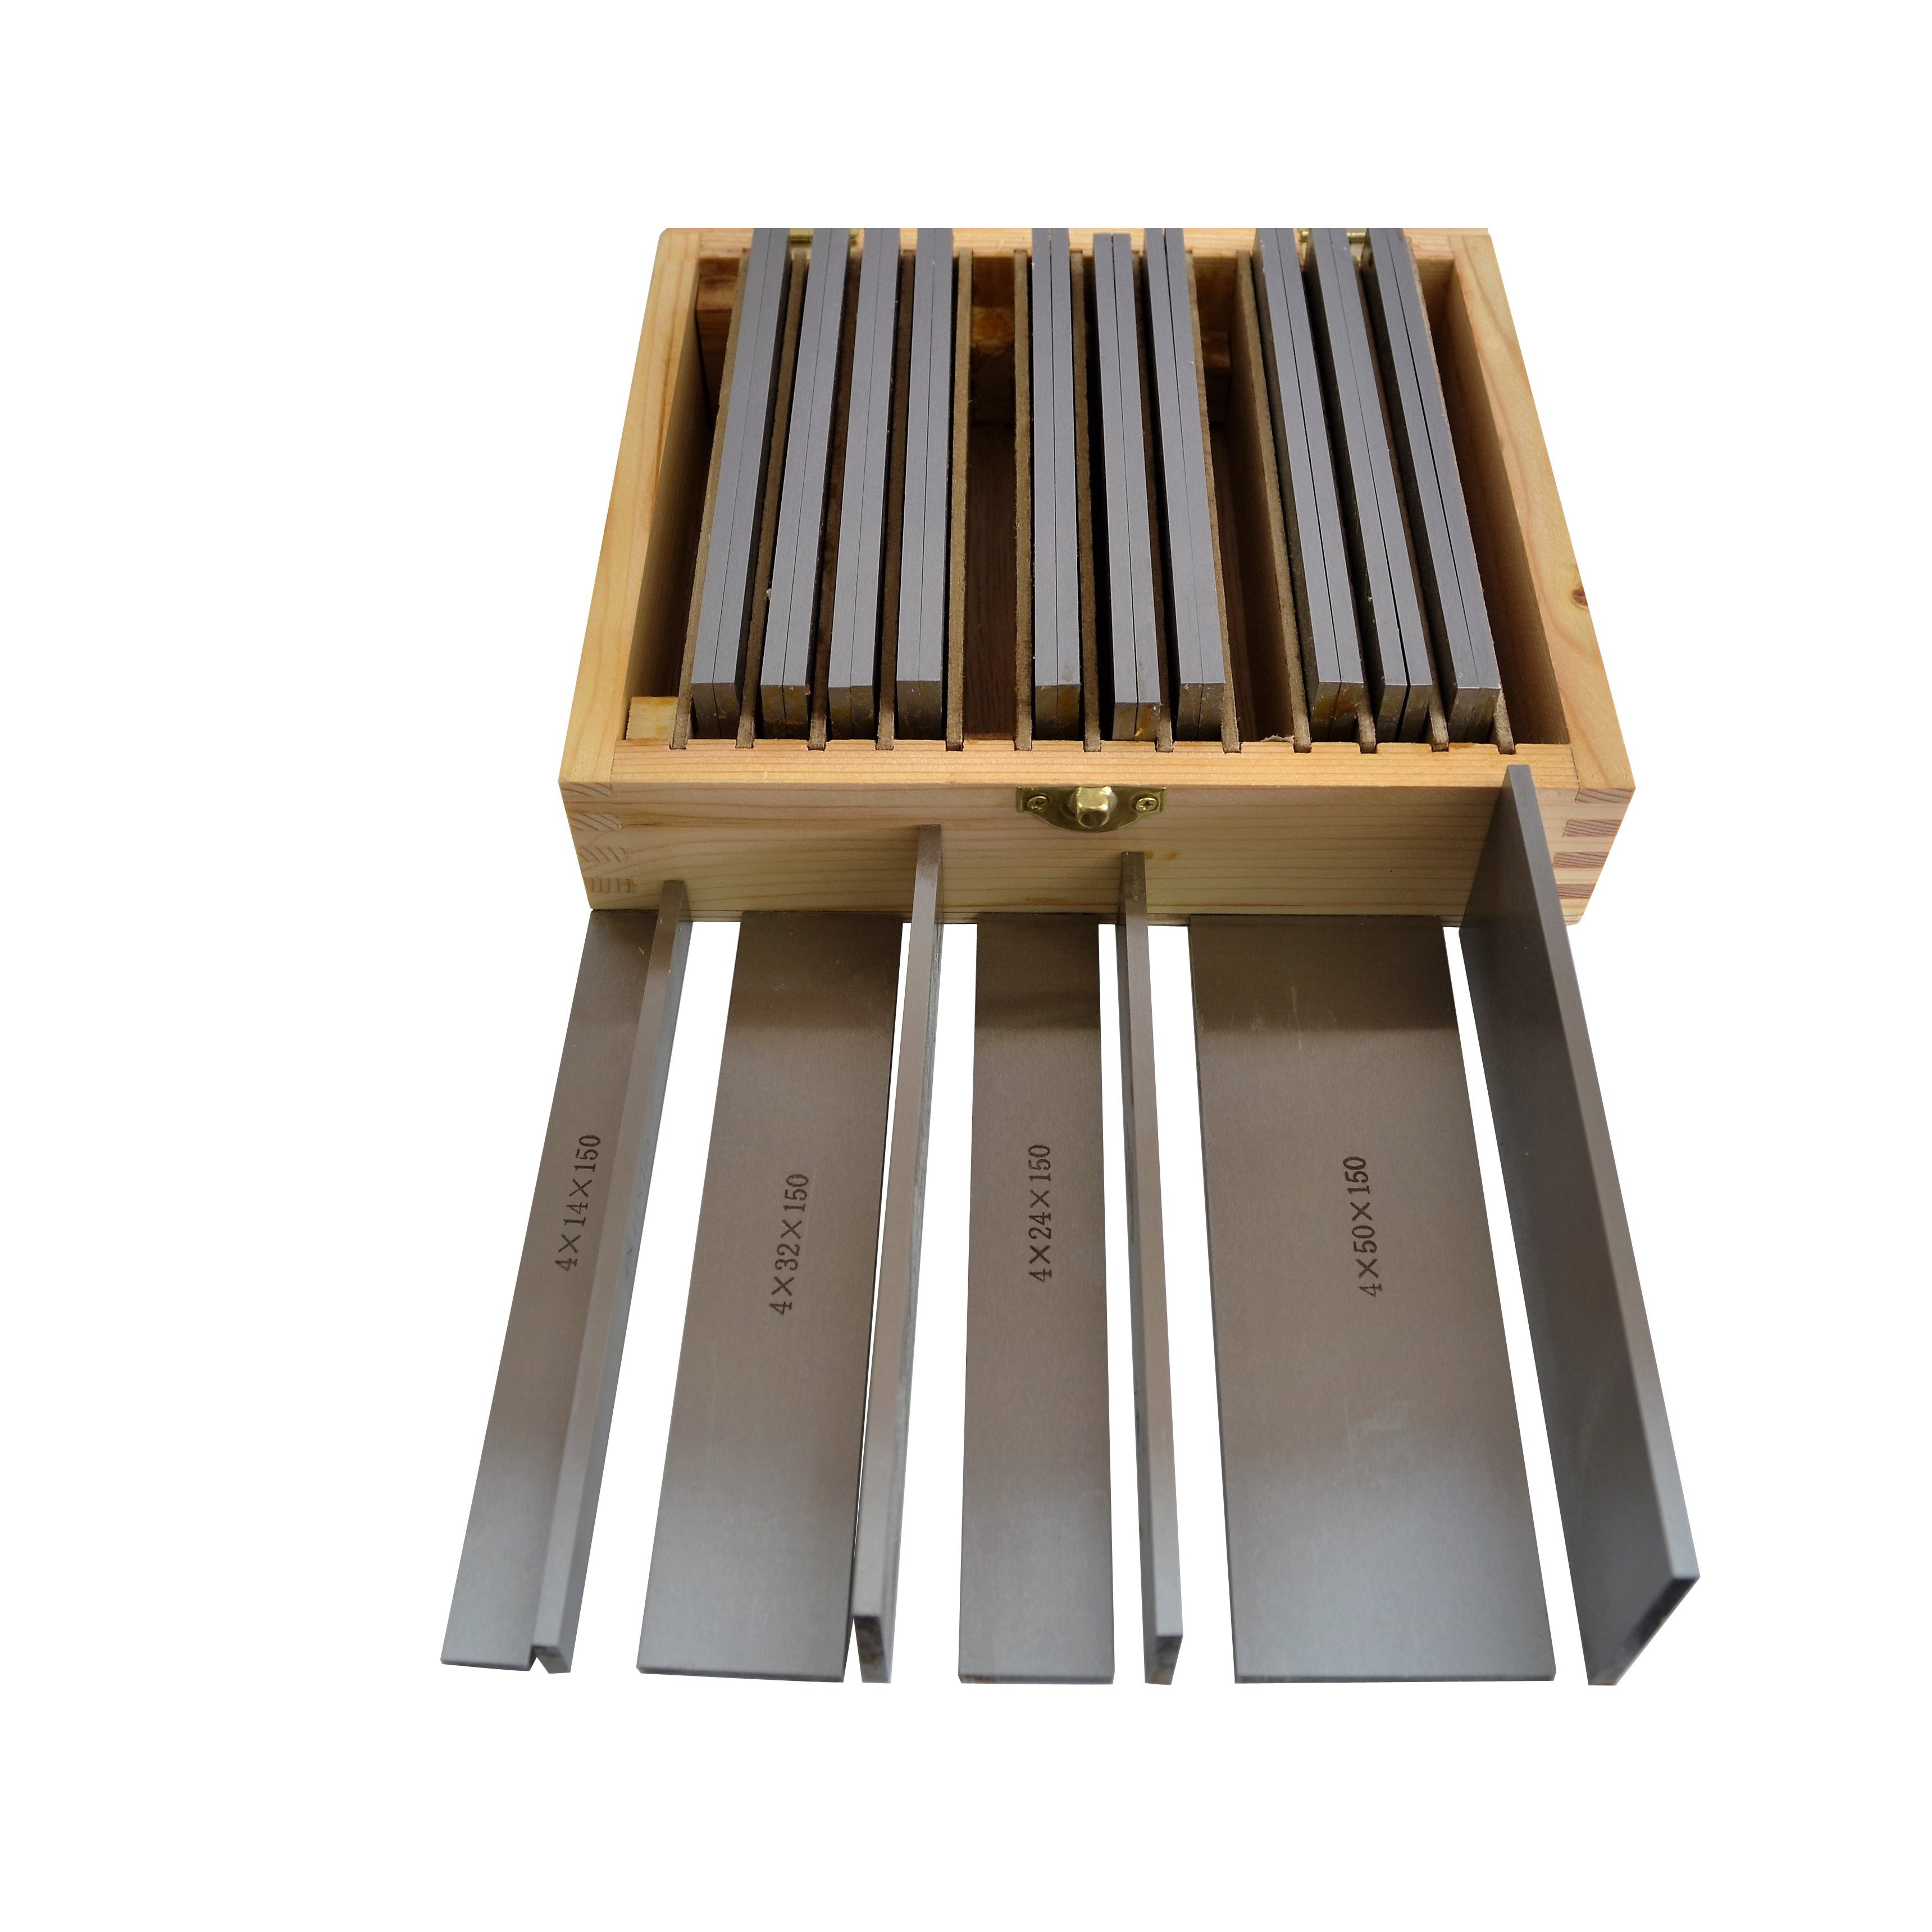 parallel steel gauge block ground steel bars precision cnc milling 4mm thick industrial measurement 